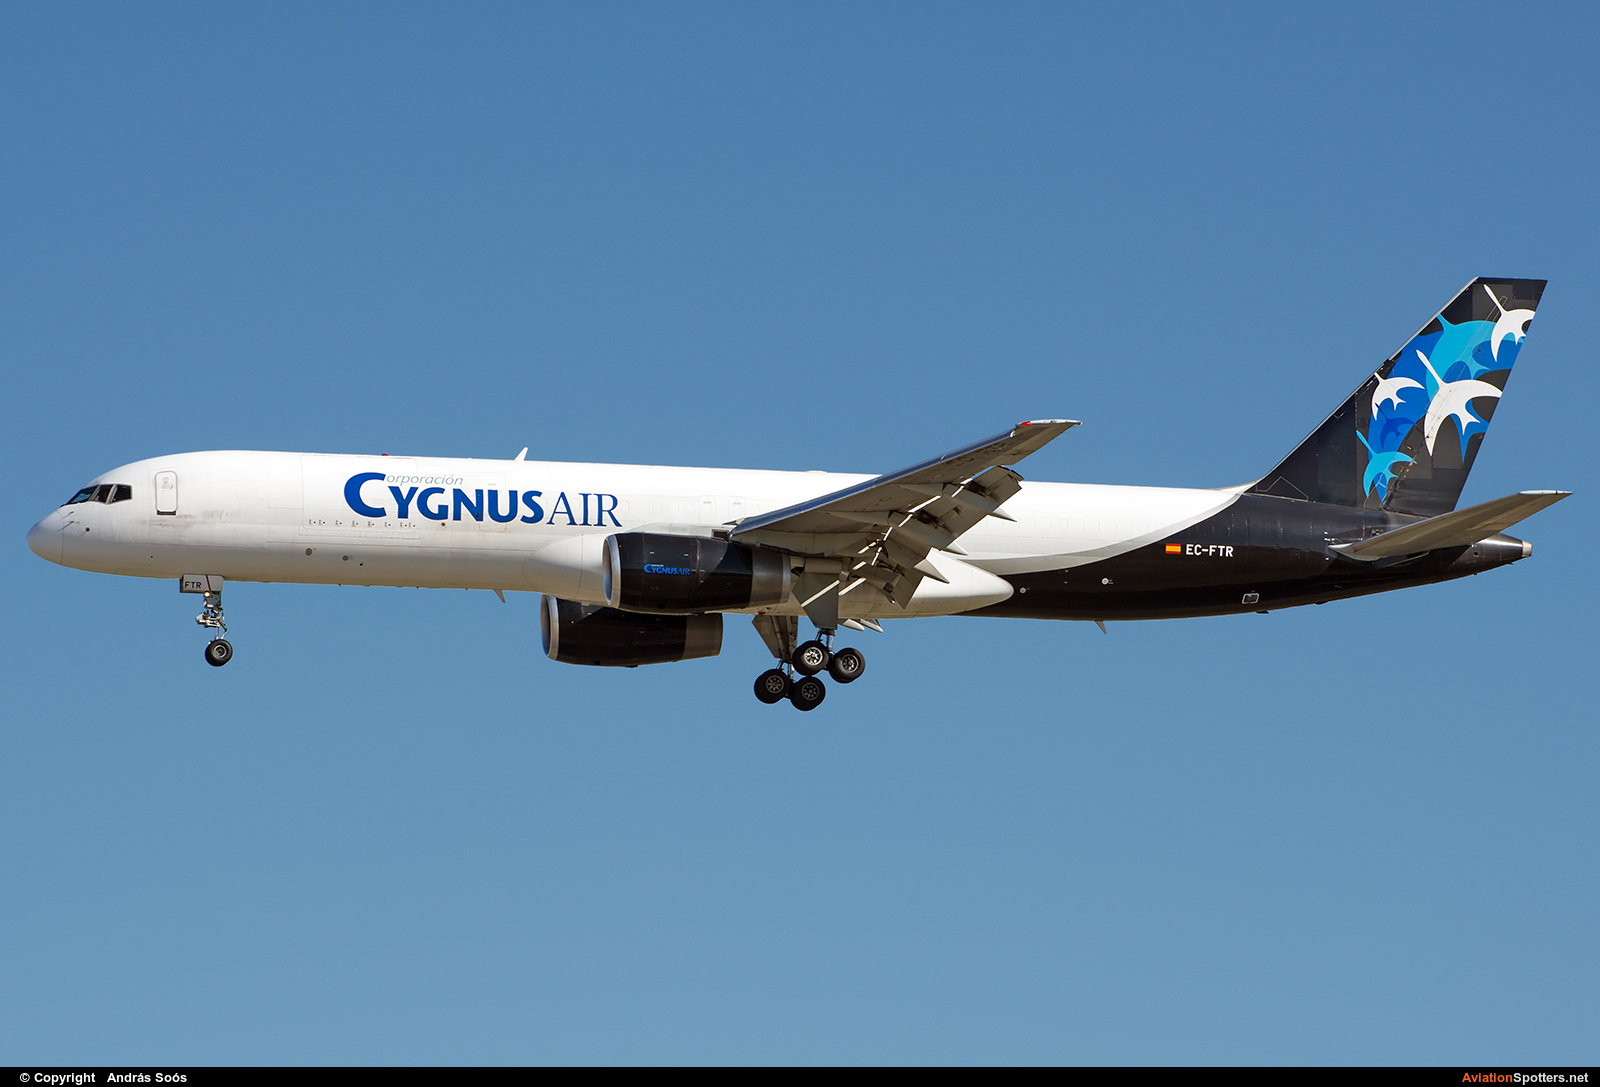 Cygnus Air  -  757-200F  (EC-FTR) By András Soós (sas1965)